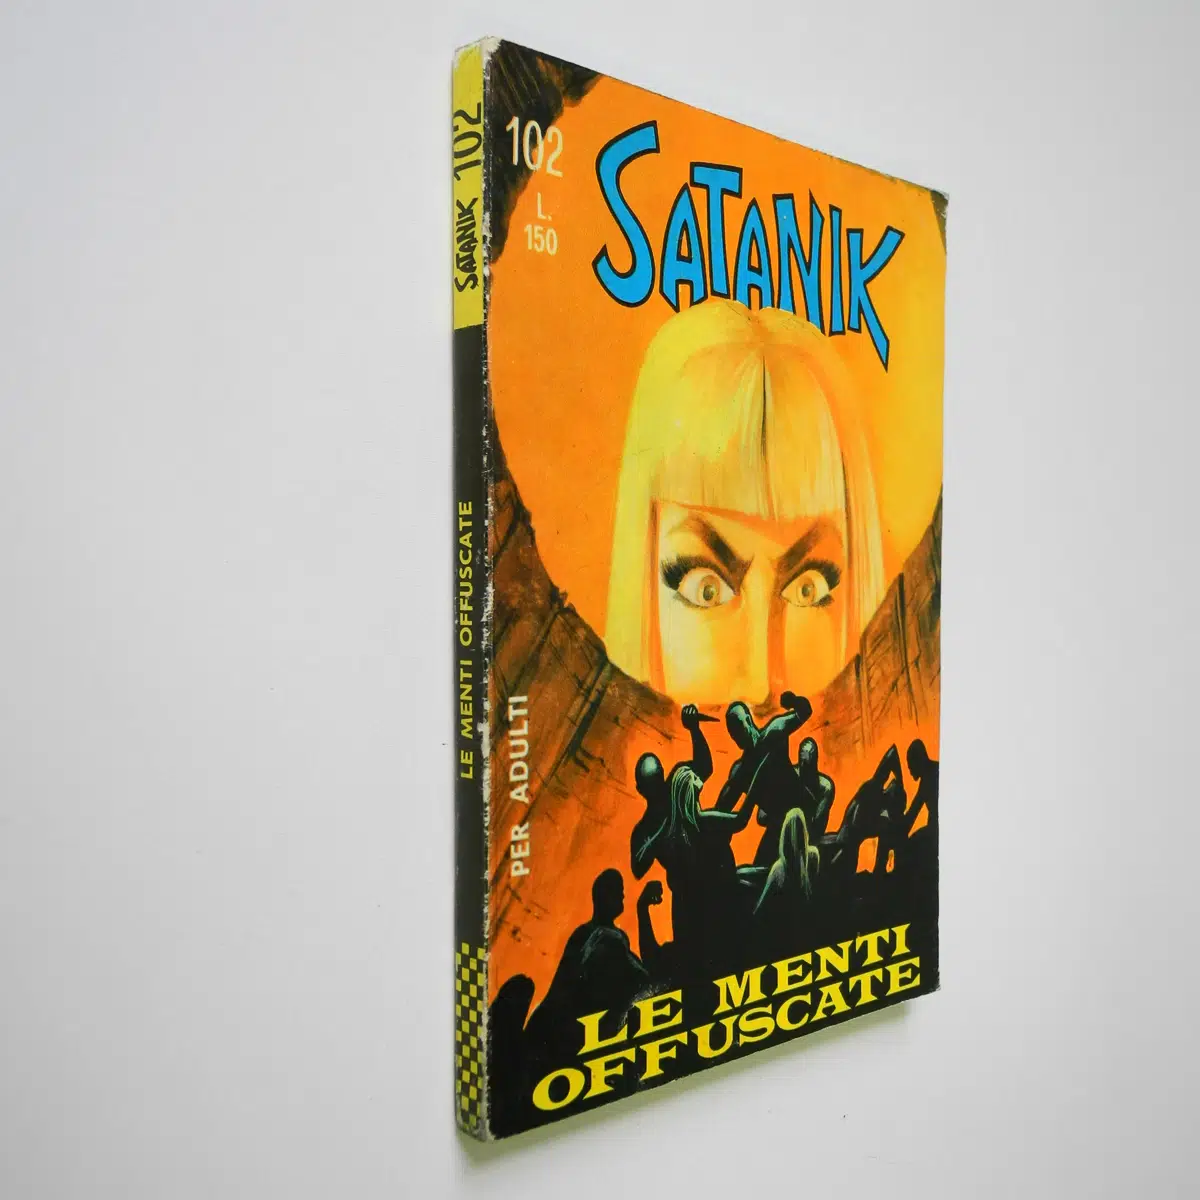 Satanik n. 102 originale del 1968 Corno